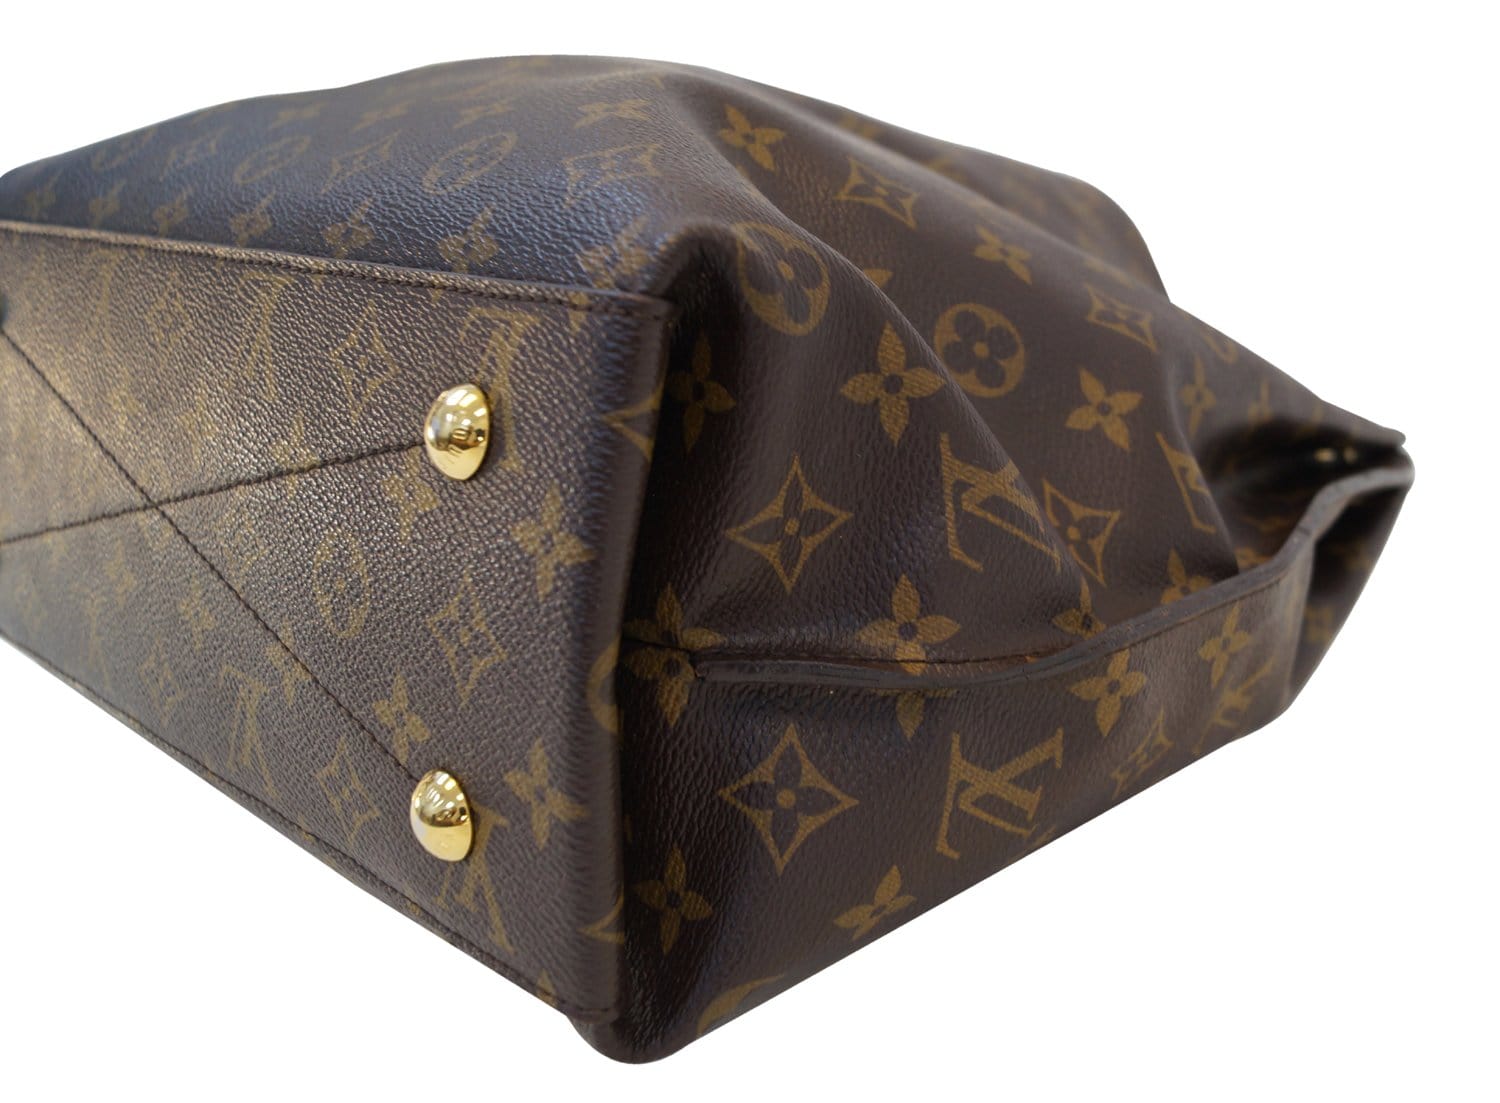 Authentic Louis Vuitton Metis Hobo Bag